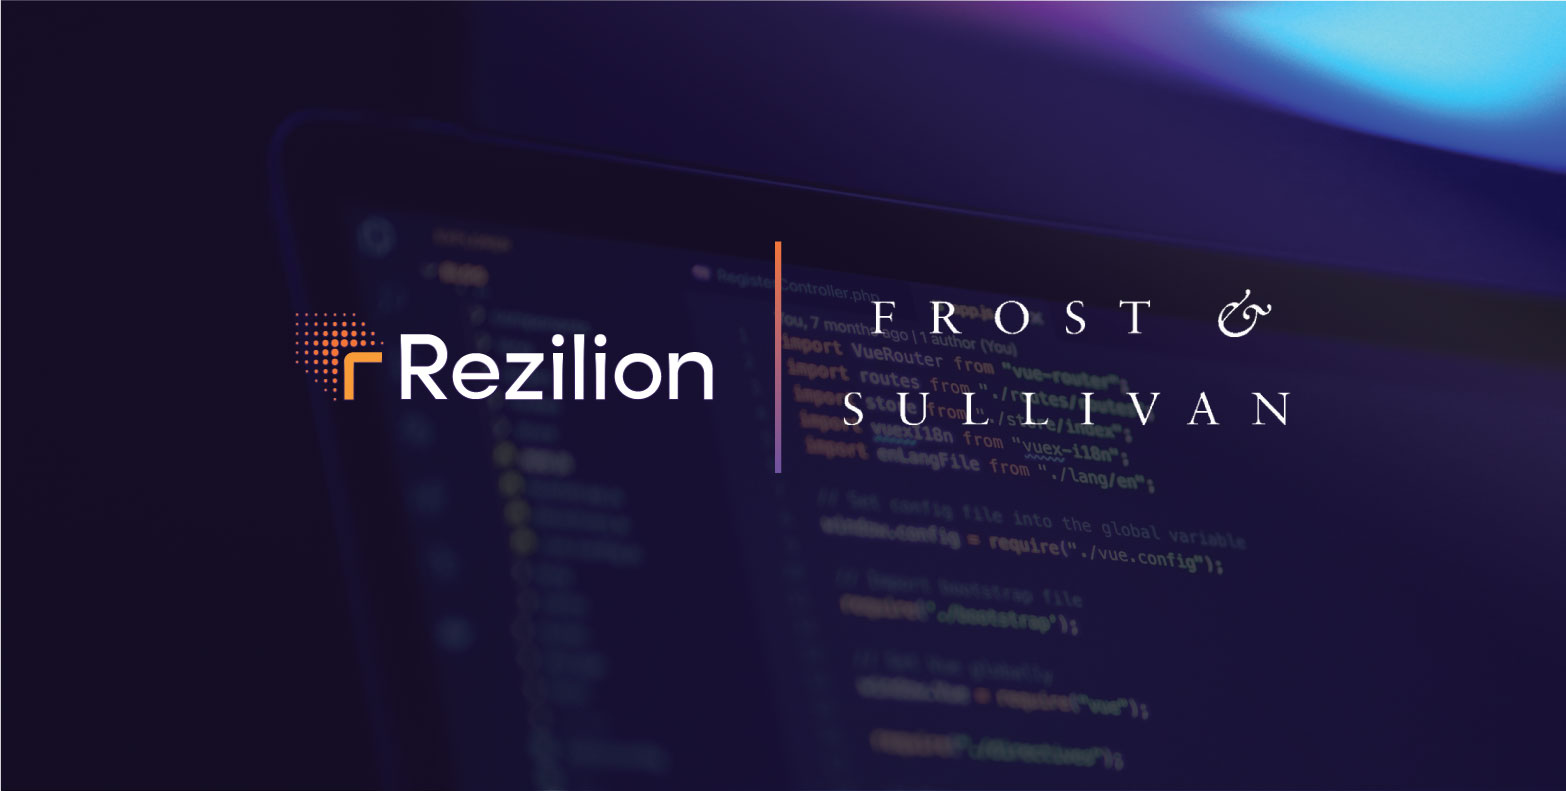 Rezilion's logo with the Frost & Sullivan logo